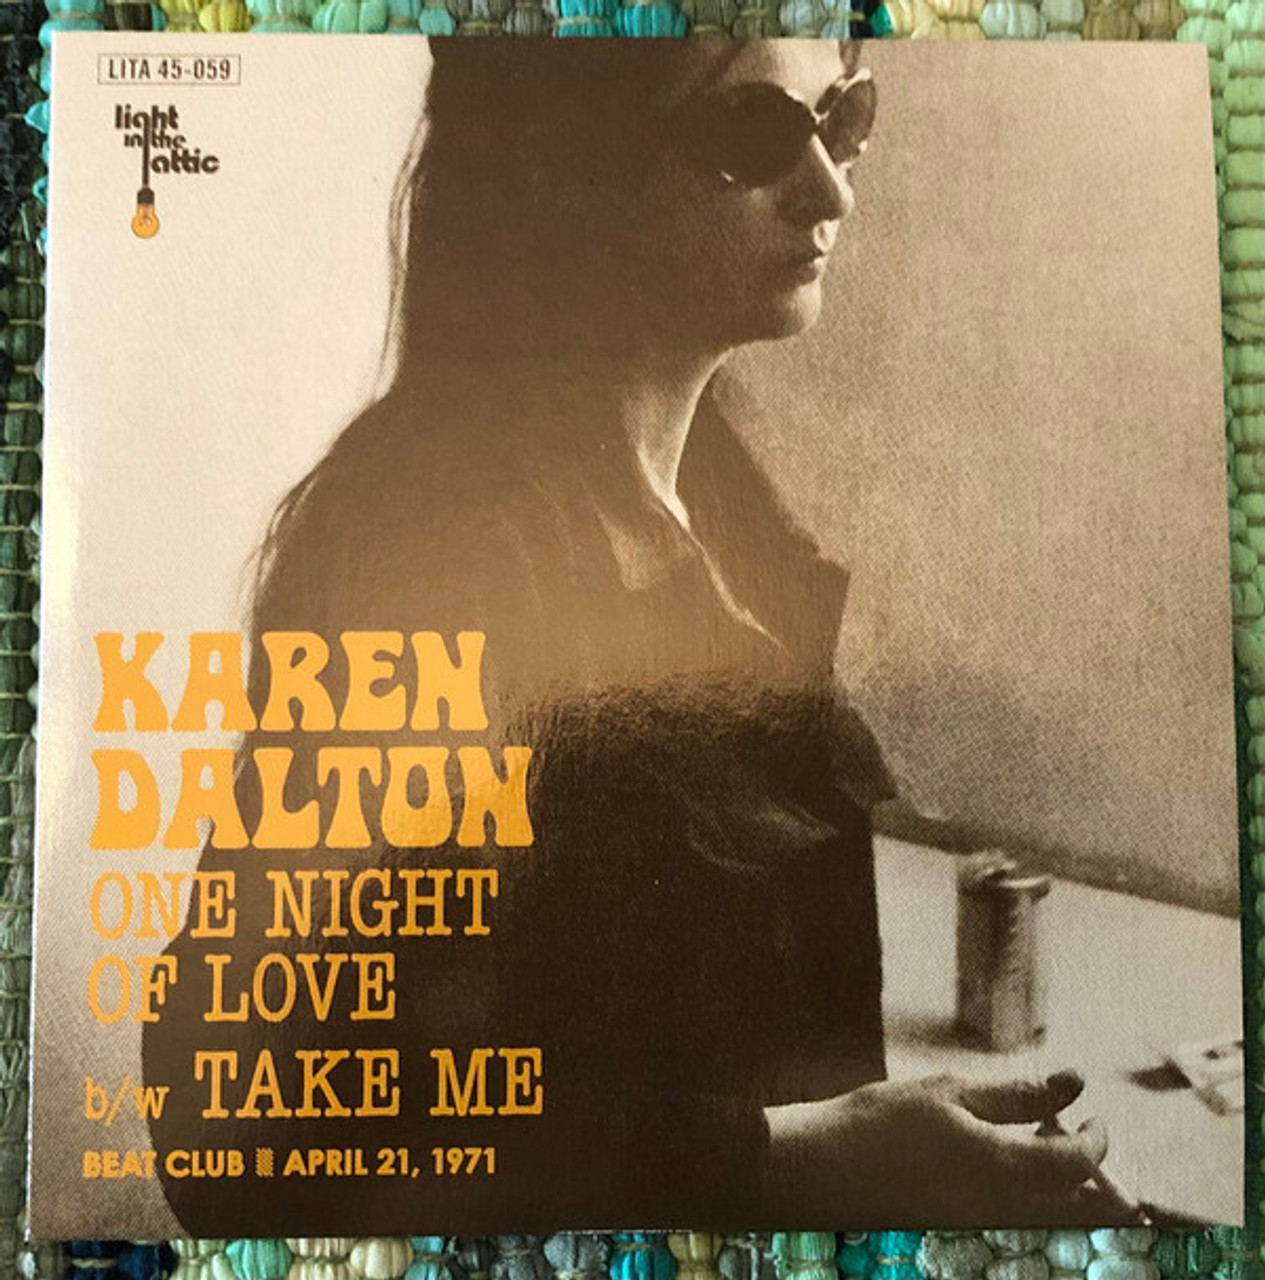 1234567890 - Album by Dalton.